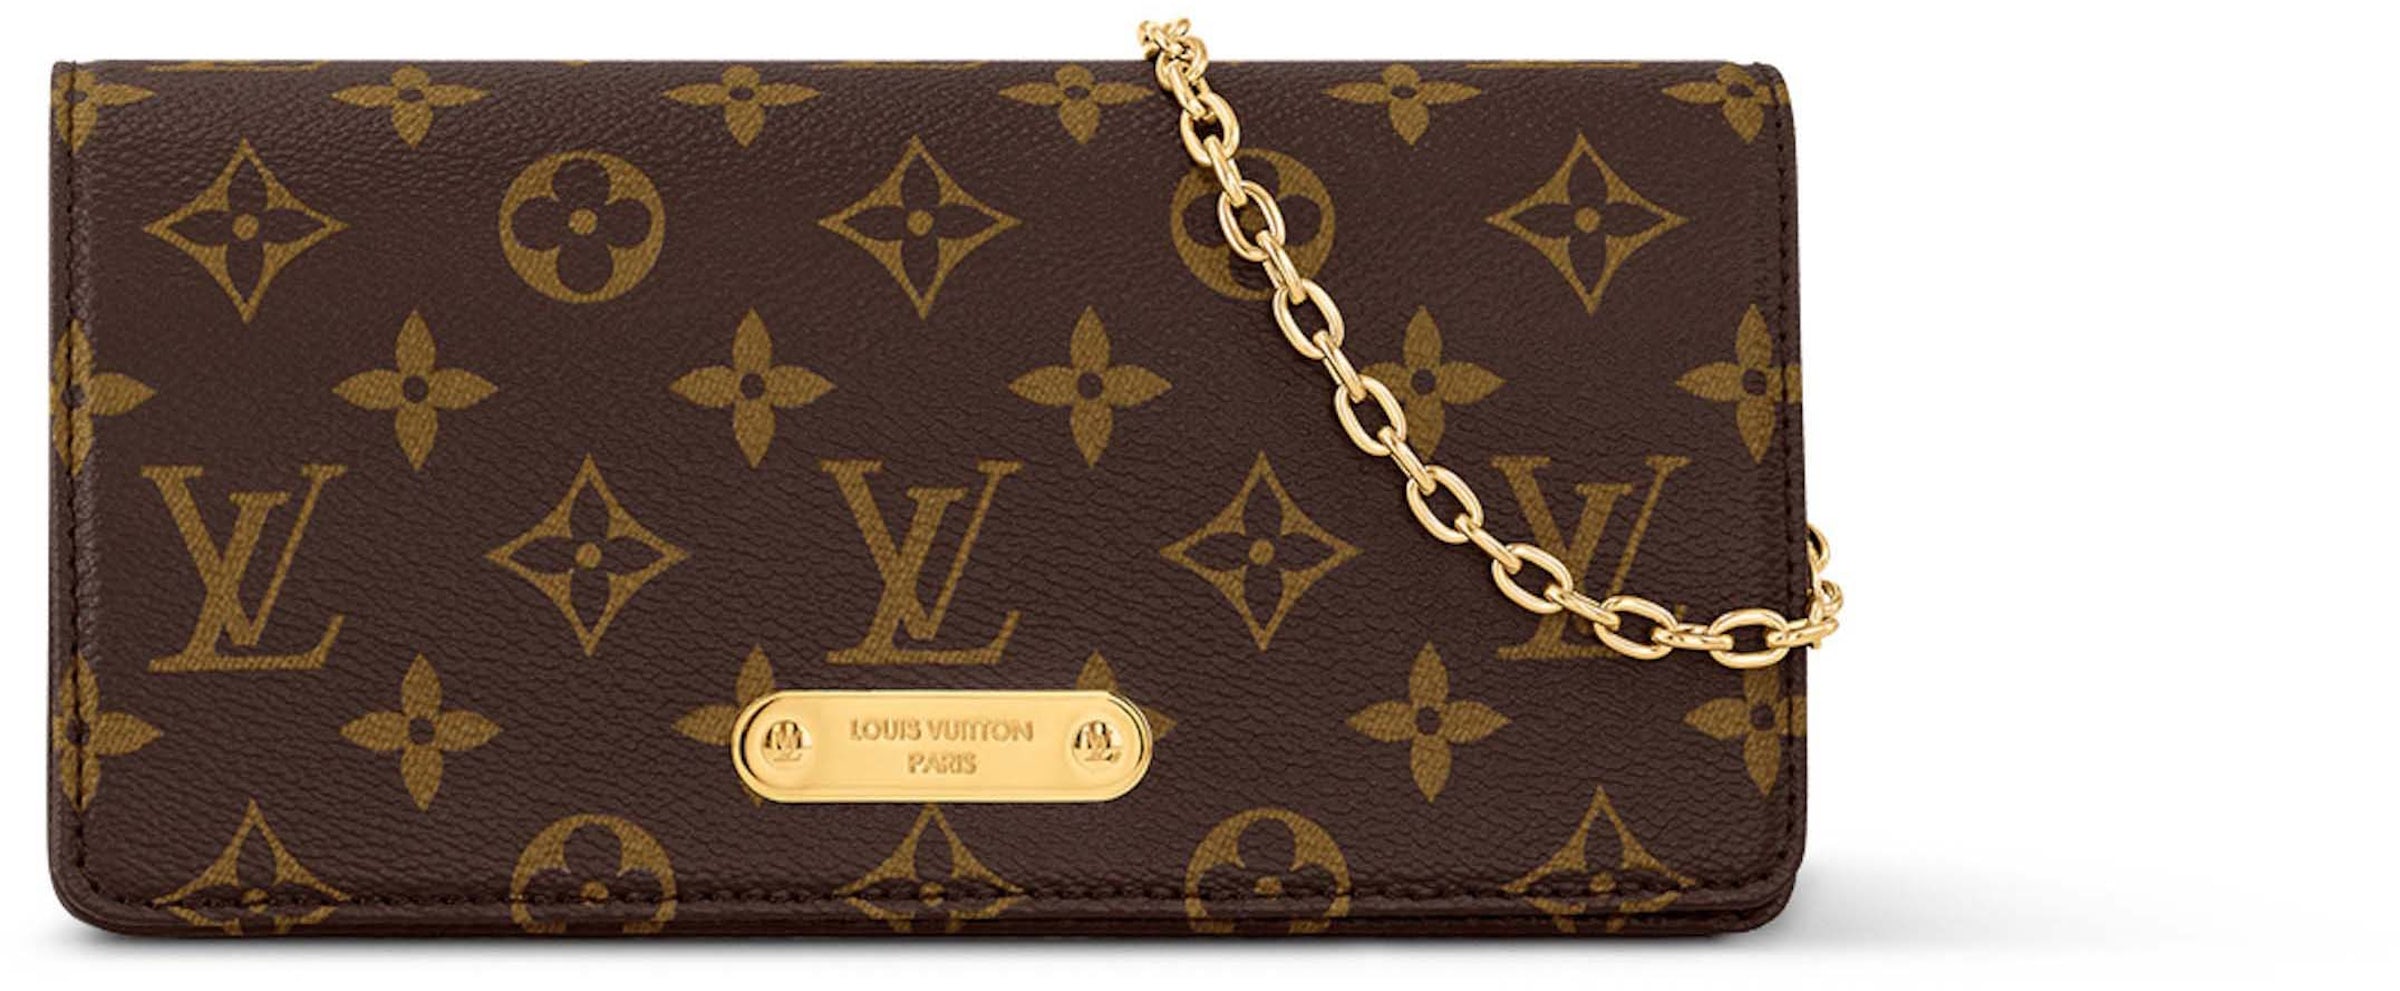 Louis Vuitton Wallet On Chain Lily Monogram